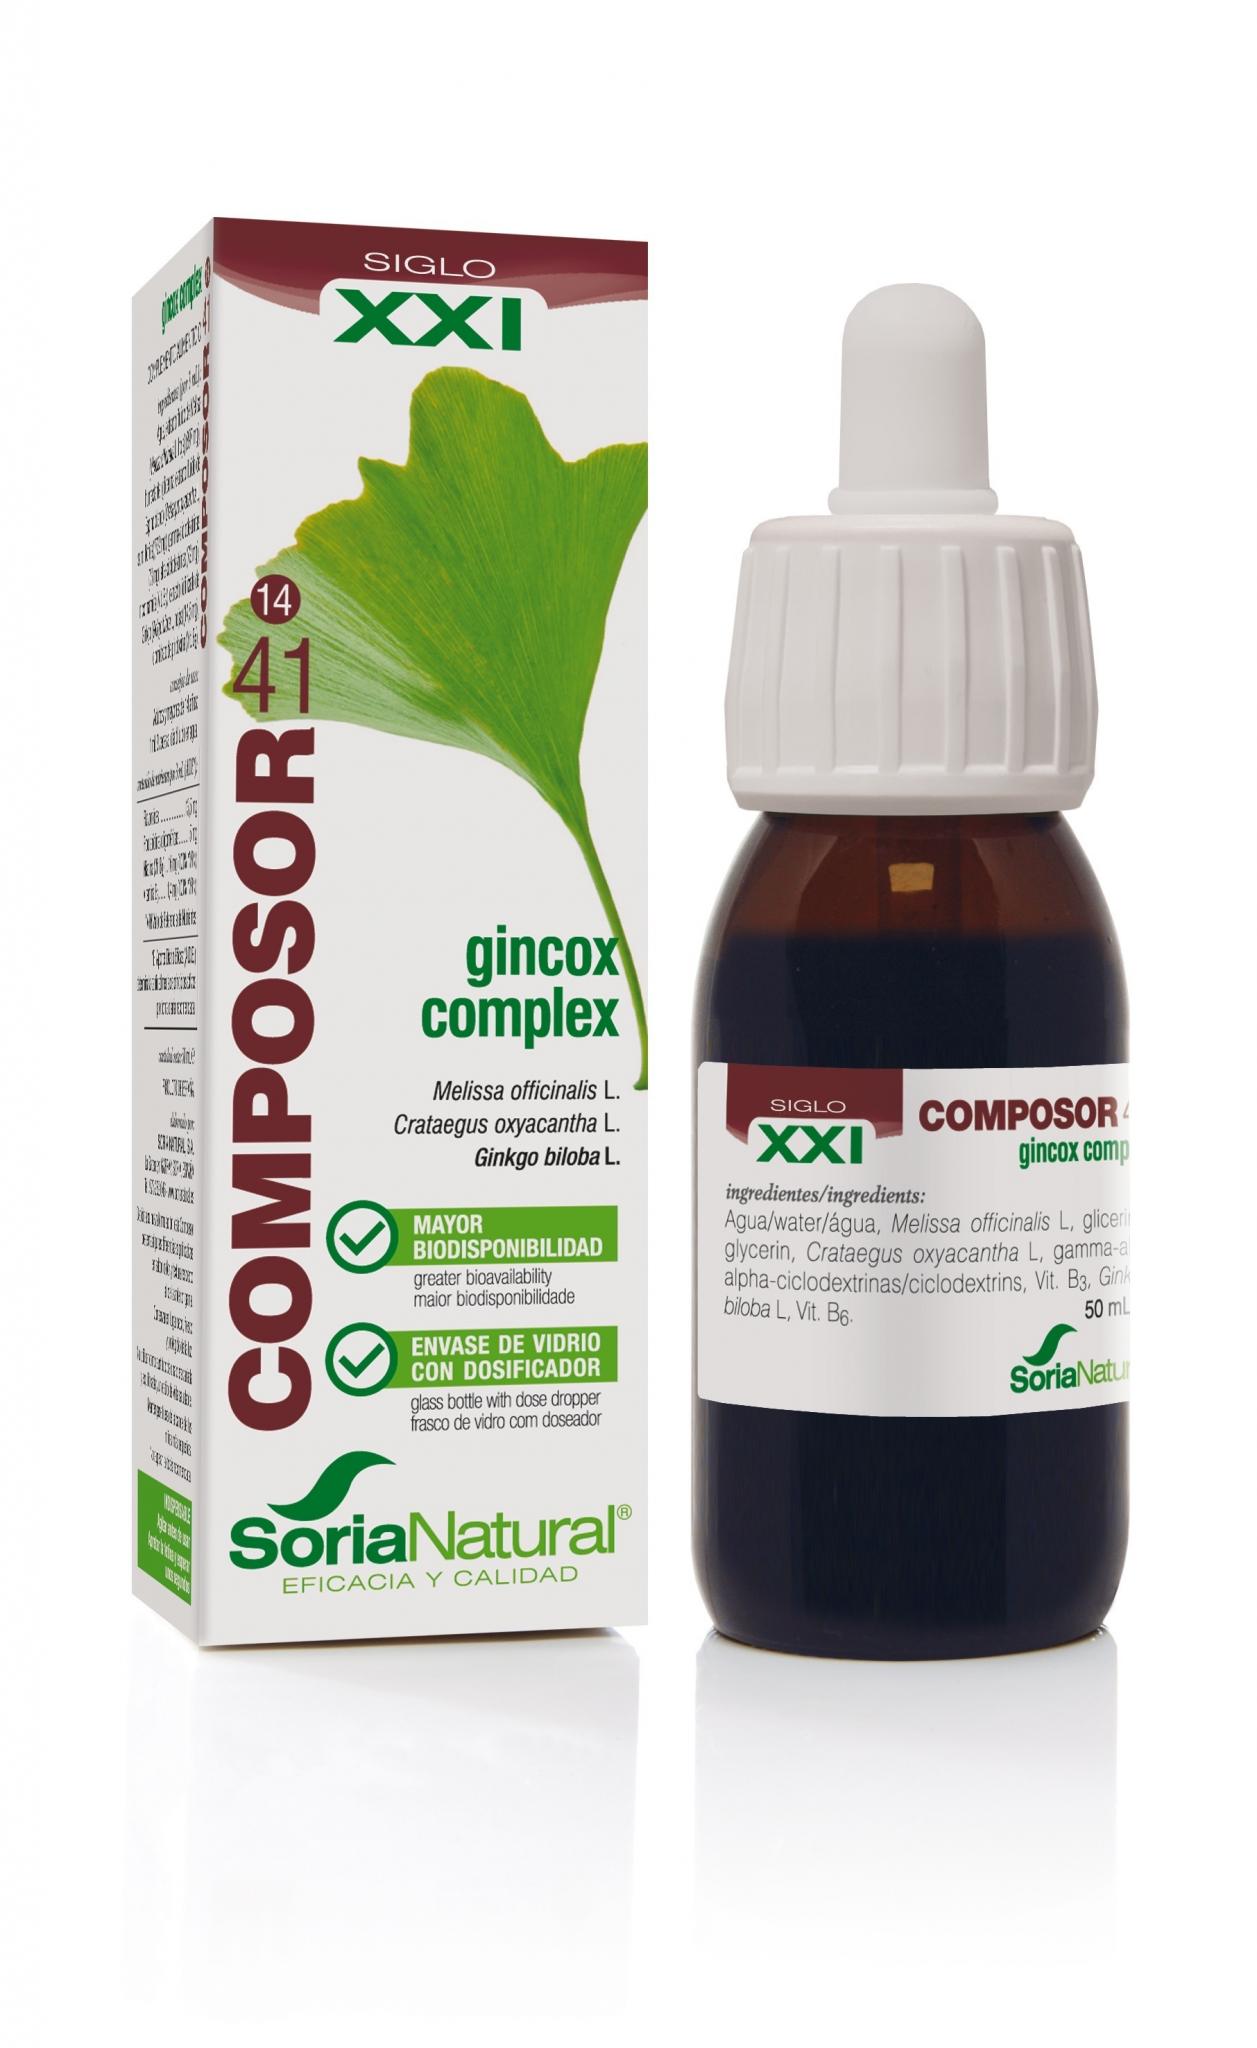 composor-41-gincox-complex-soria-natural-1.jpg